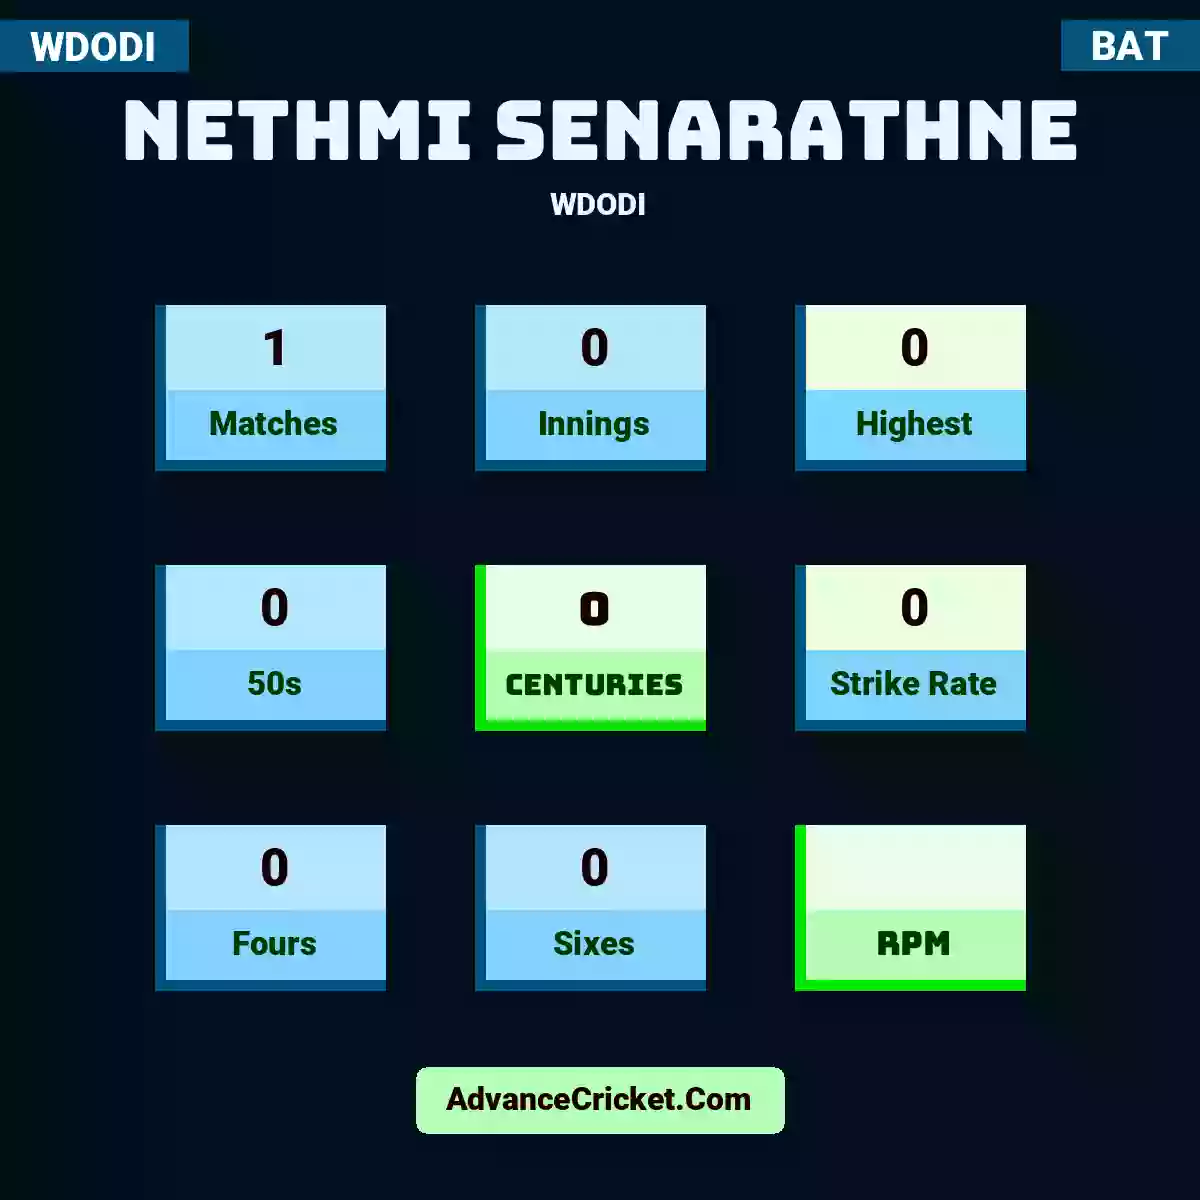 Nethmi Senarathne WDODI , Nethmi Senarathne played 1 matches, scored 0 runs as highest, 0 half-centuries, and 0 centuries, with a strike rate of 0. N.Senarathne hit 0 fours and 0 sixes.